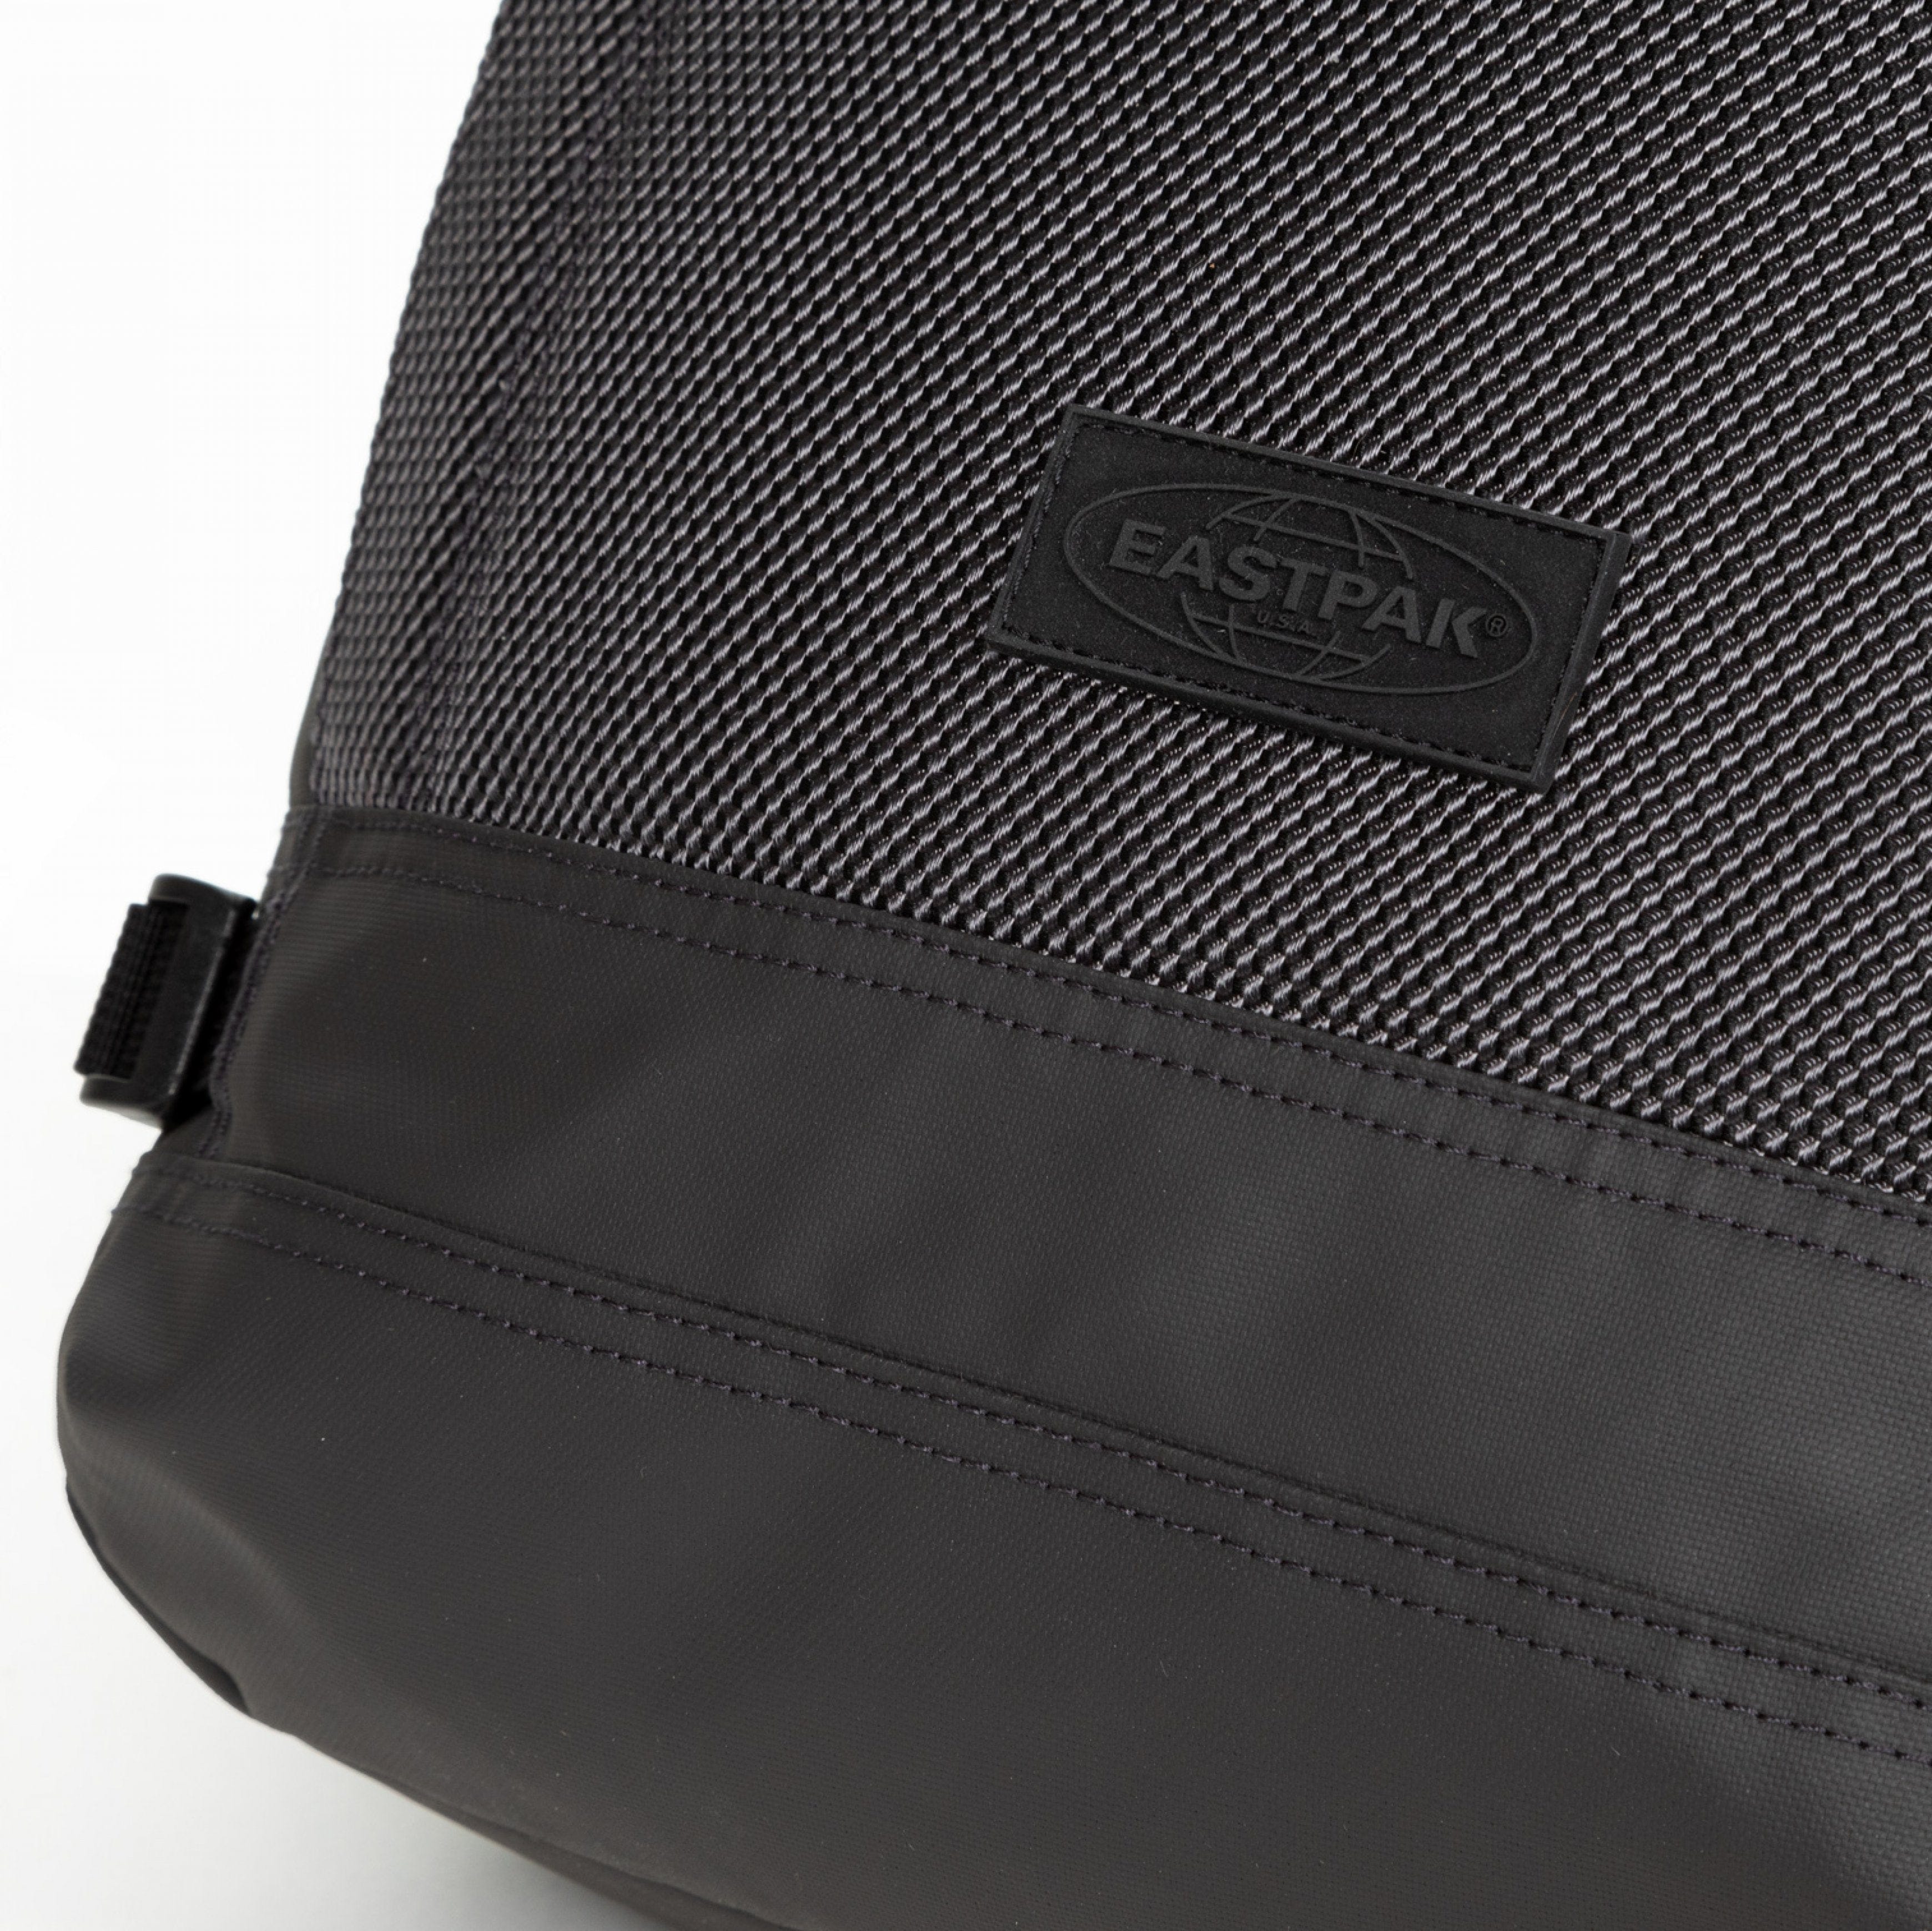 EASTPAK-Tecum M-Medium Backpack with laptop compartment-Cnnctaccentgrey-EK00091DI97